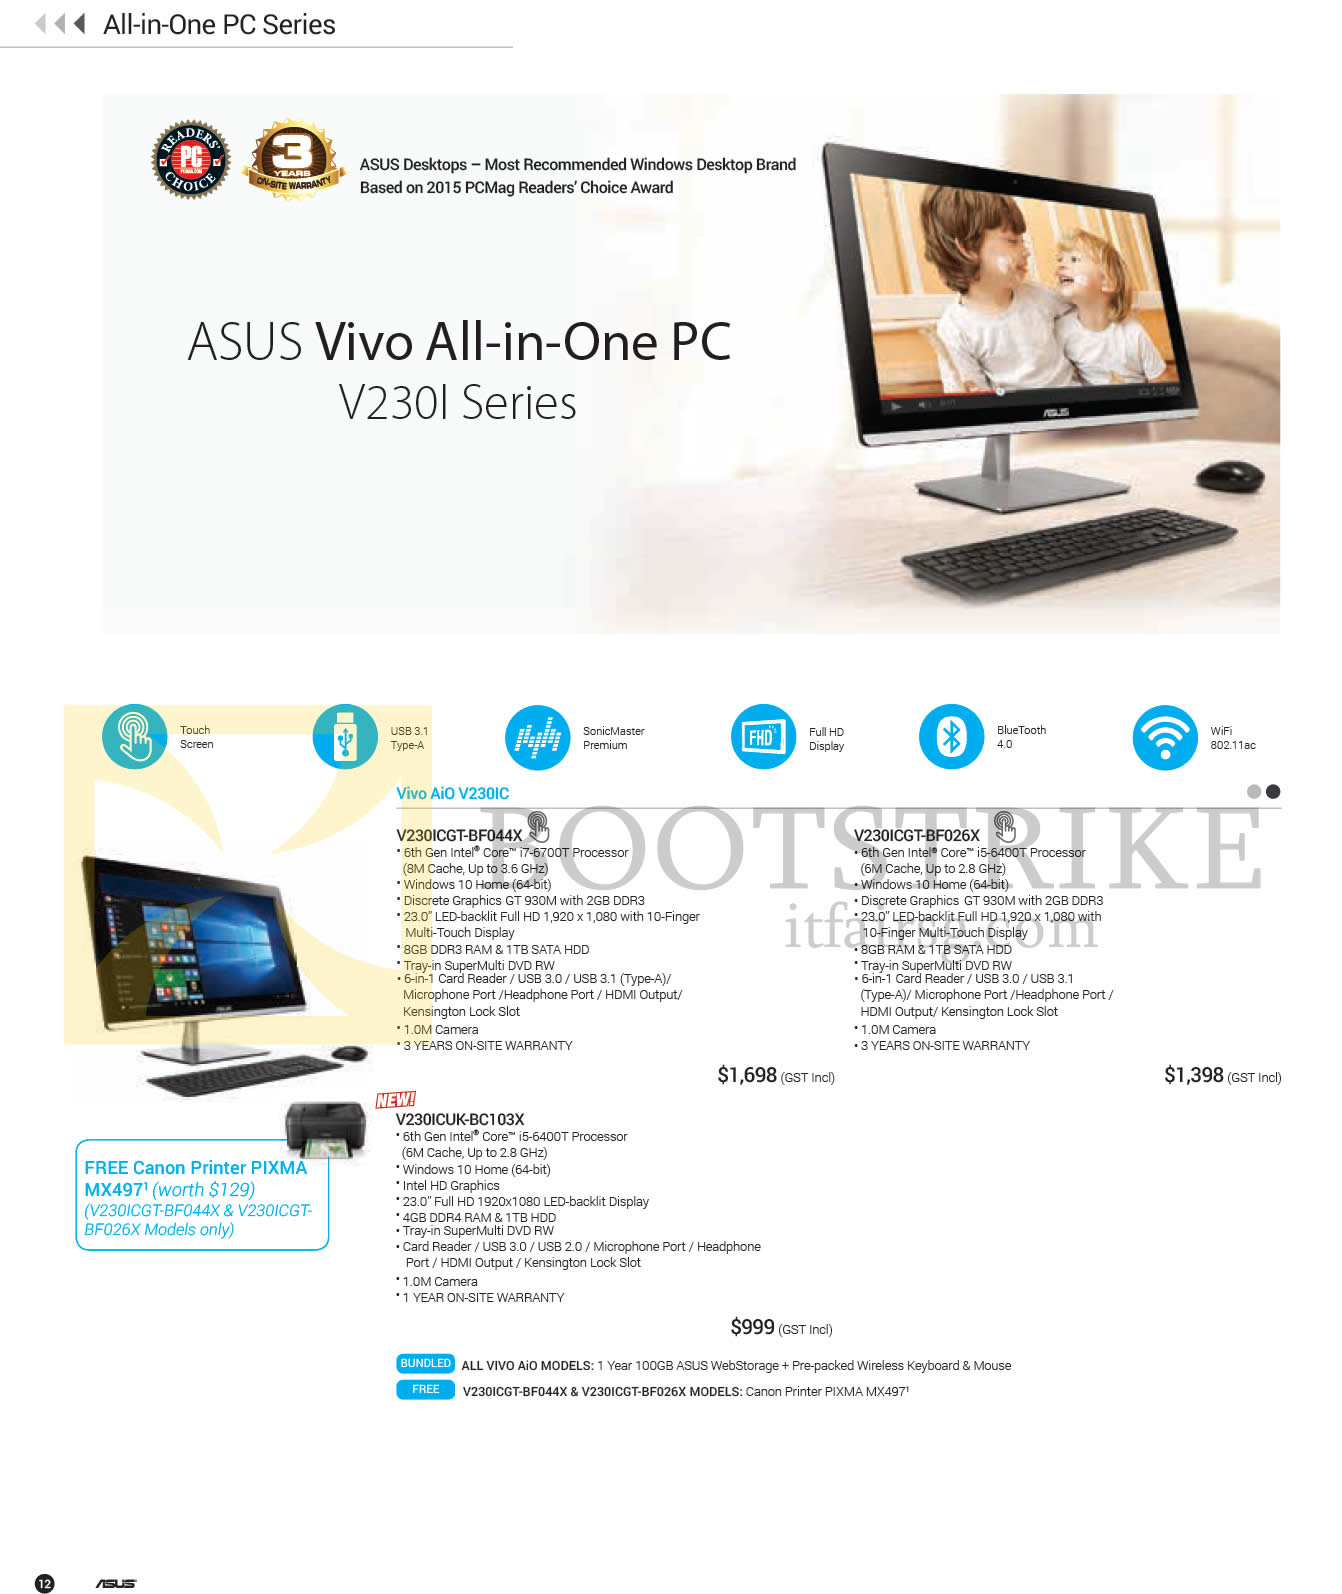 PC SHOW 2016 price list image brochure of ASUS Desktop PCs AIO Vivo PCs V230I Series, V230ICGT-BF044X, V230ICGT-BF026X, V230ICUK-BC103X